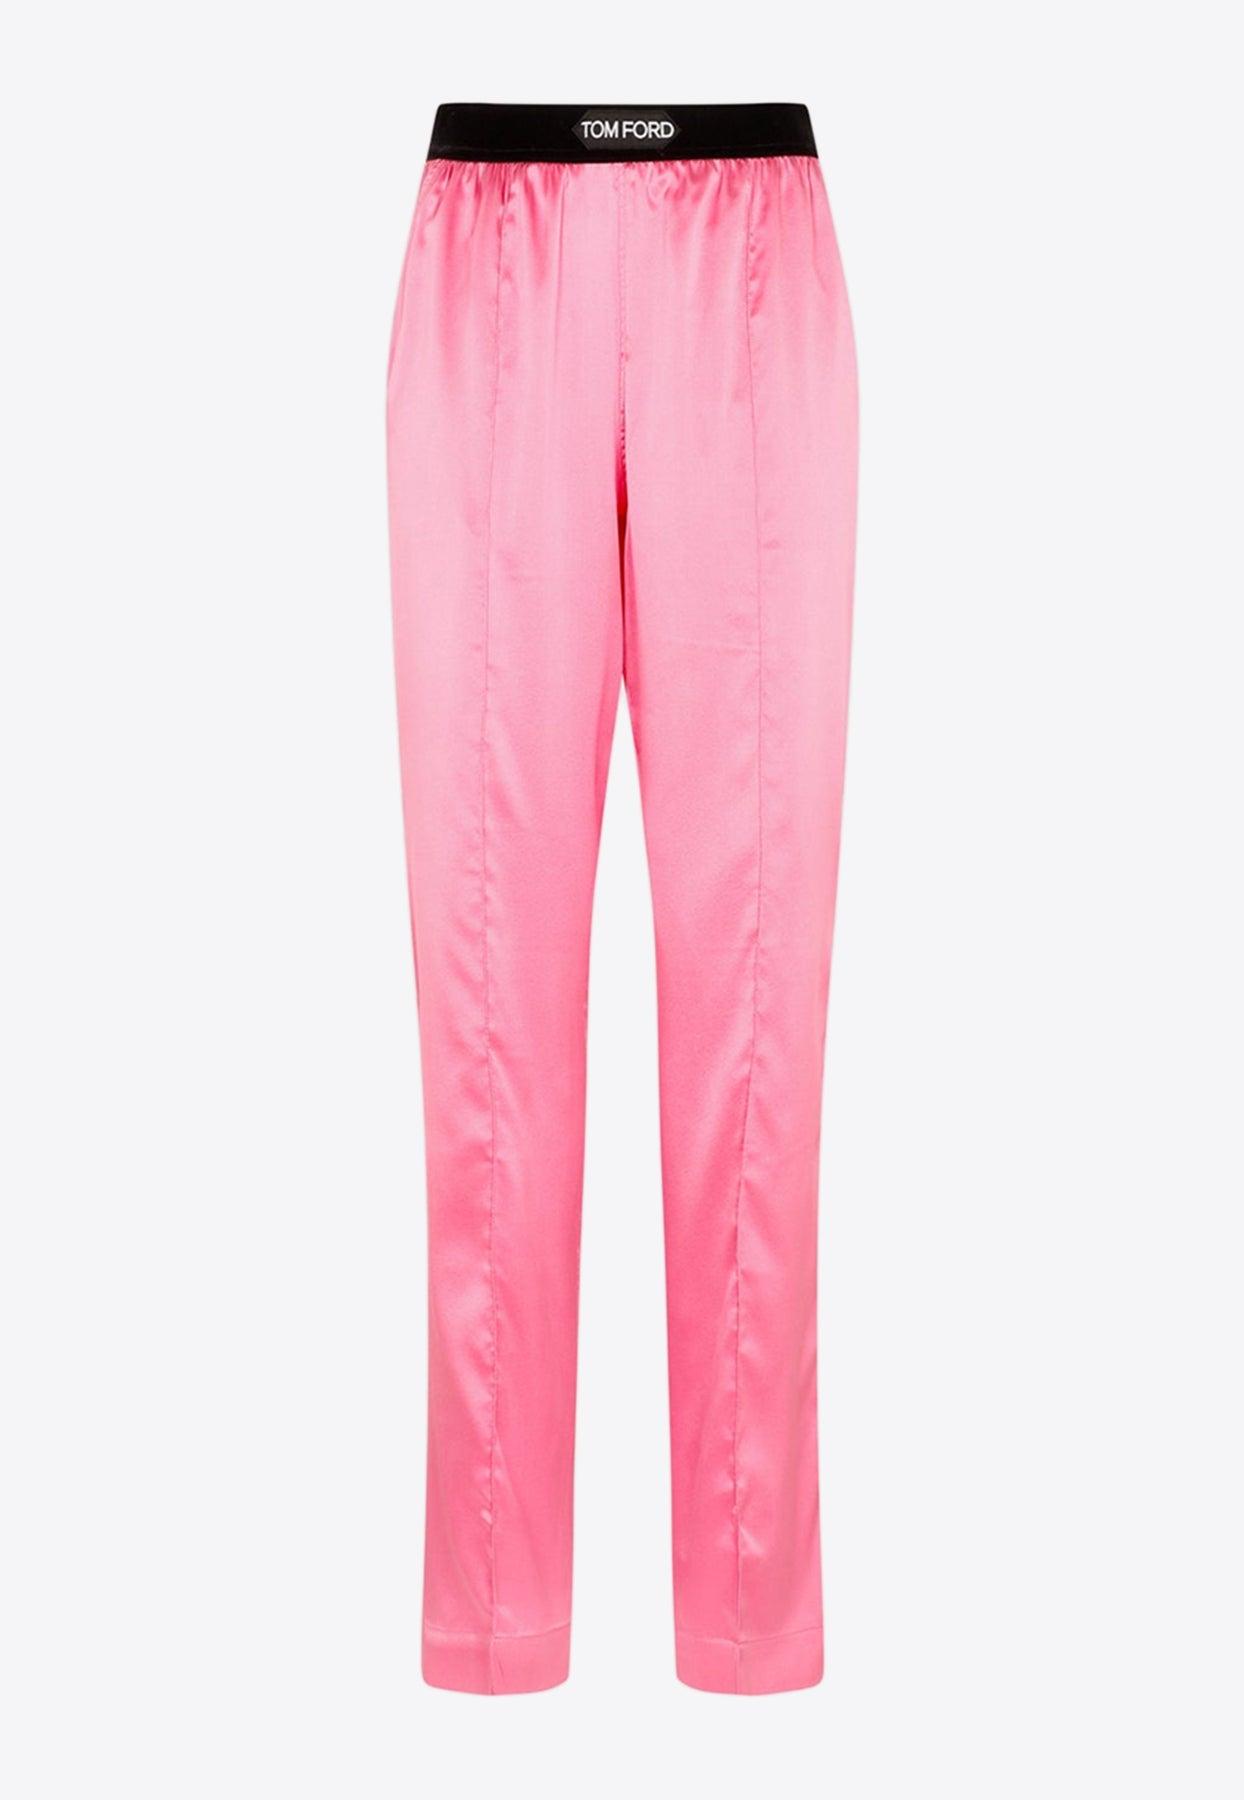 Tom Ford Logo Silk Satin Pj Pants in Pink | Lyst UK